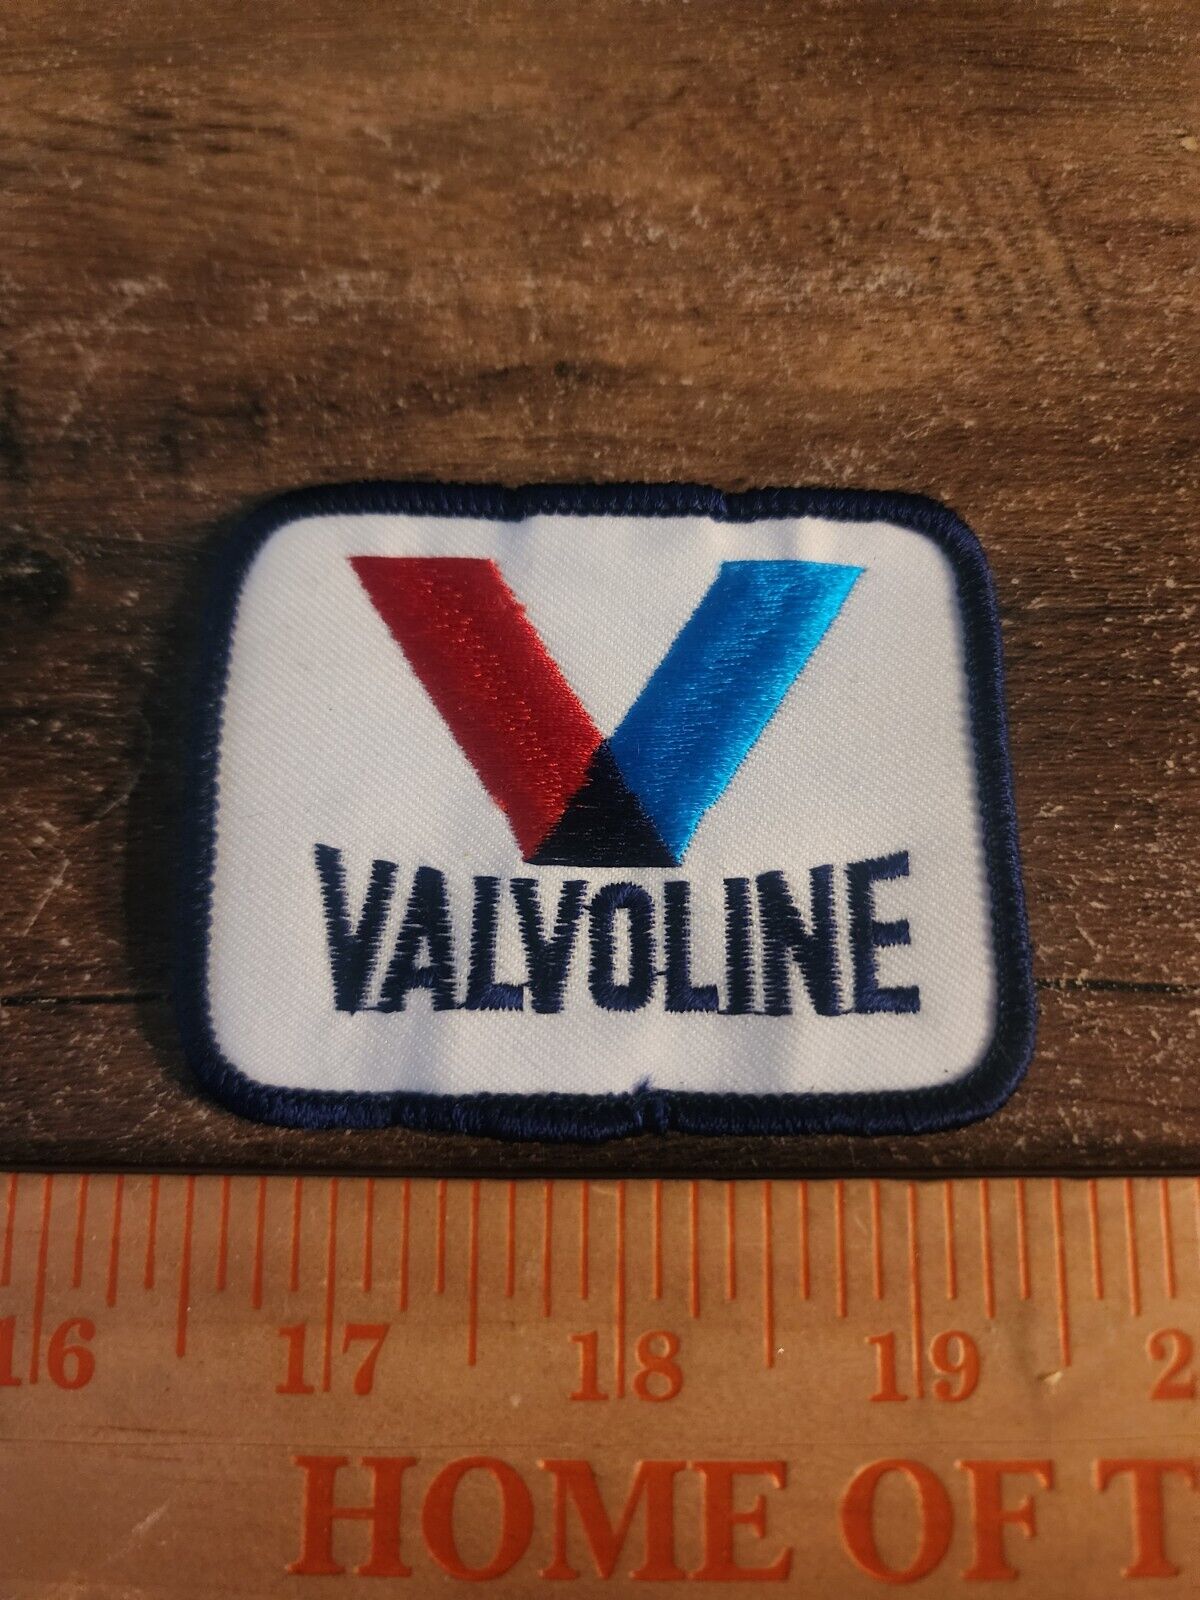 Vintage Valvoline Sew On Rectangular Embroidered Patch 